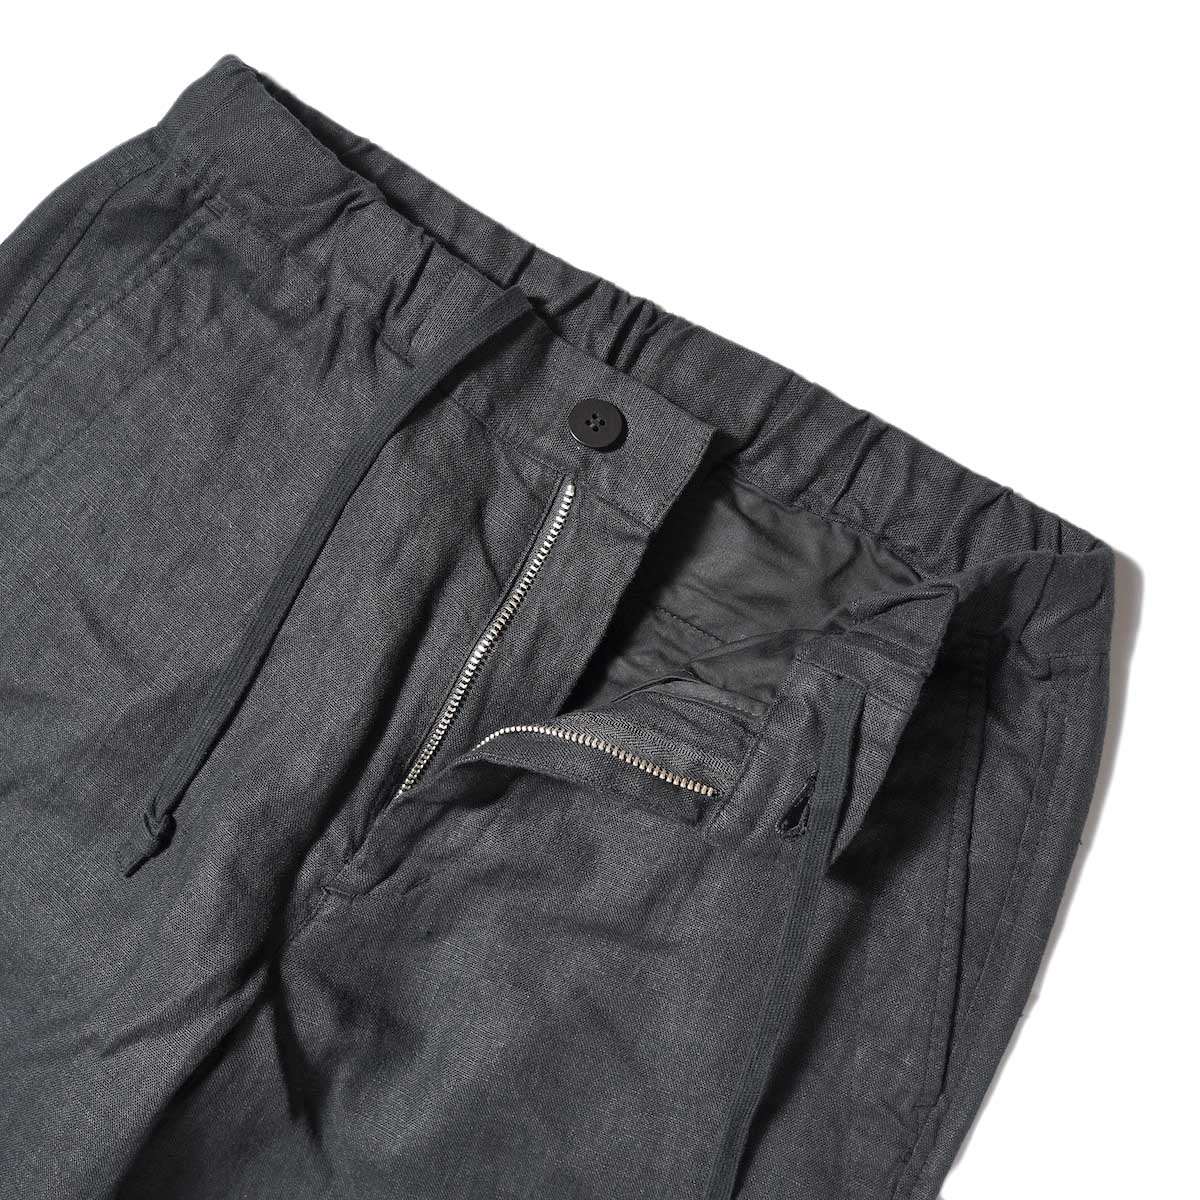 BRENA / Coq Pants - French Linen Canvas (Black) ウエスト・ドローコード